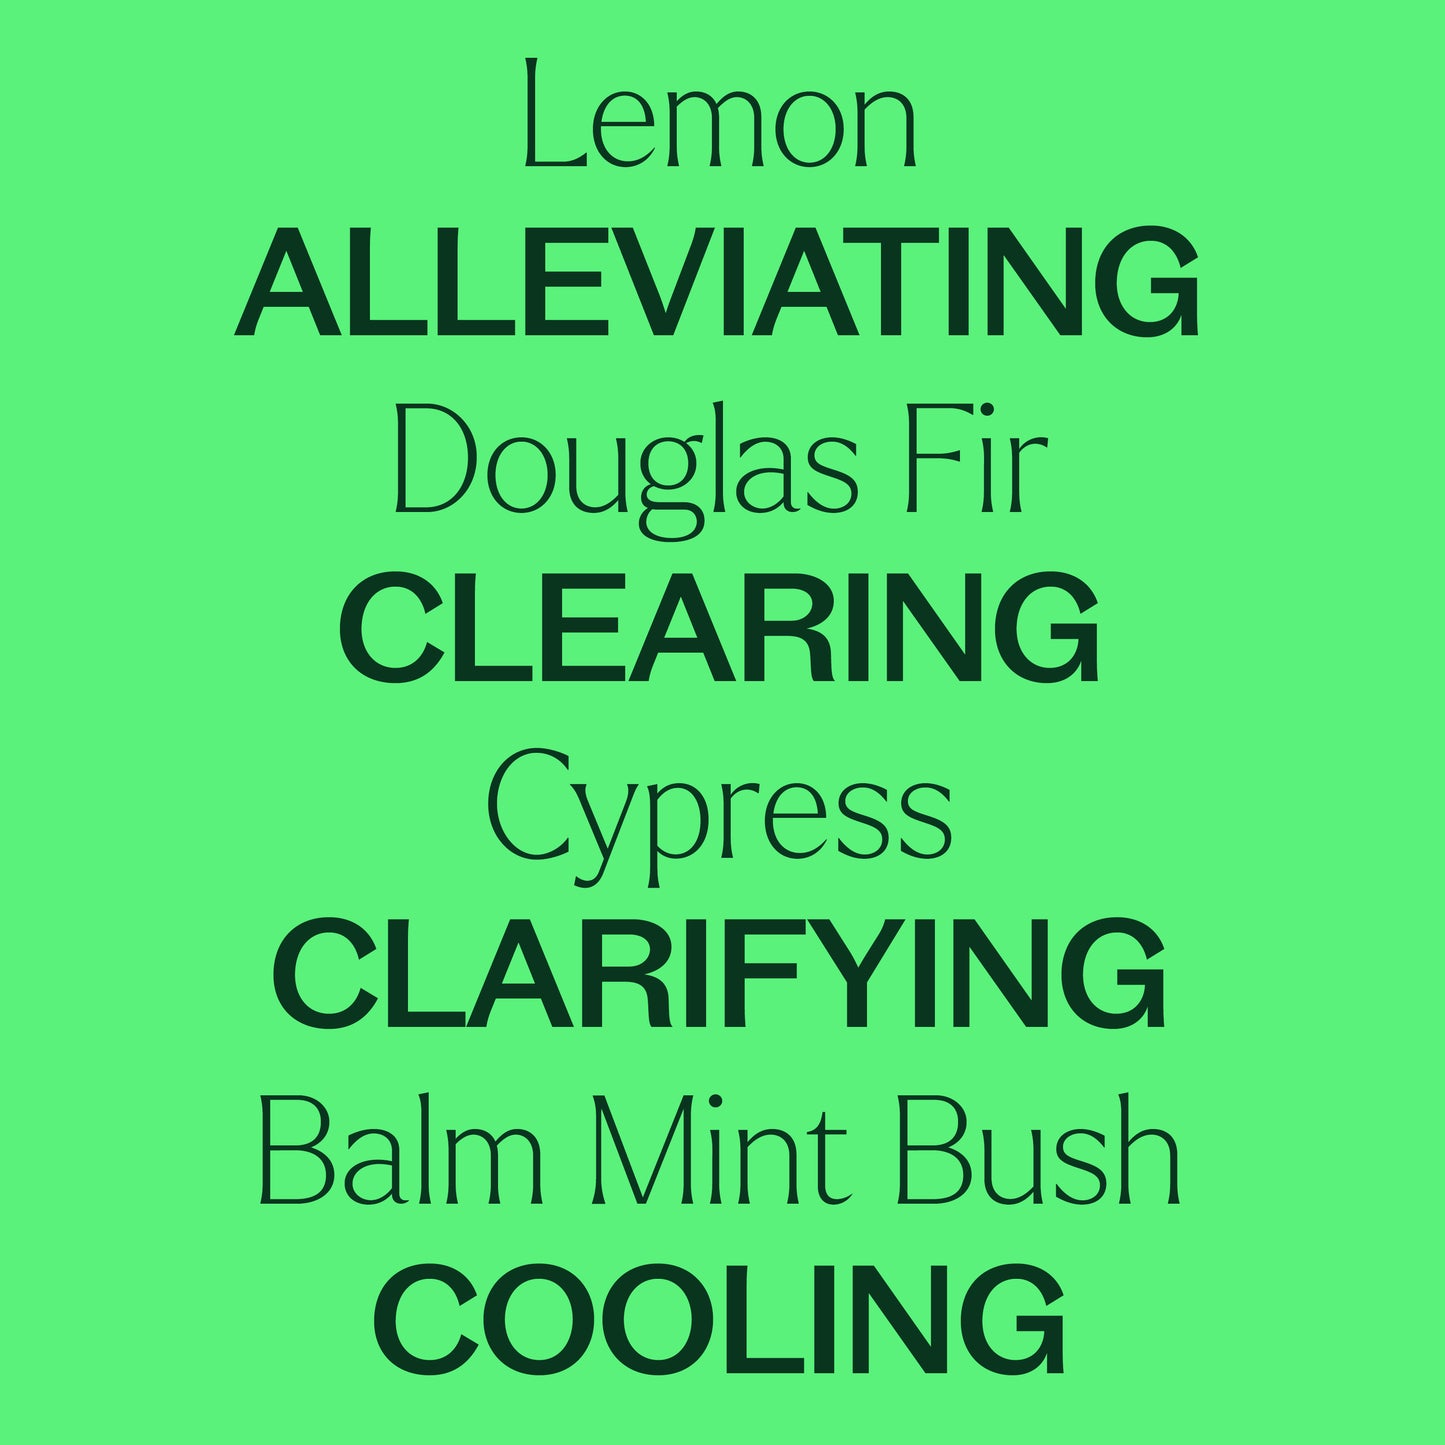 Quiet Cough™ KidSafe Essential Oil Blend main features. Lemon, alleviating, douglas fir, clearing, cypress, clarifying, balm mint bush, cooling